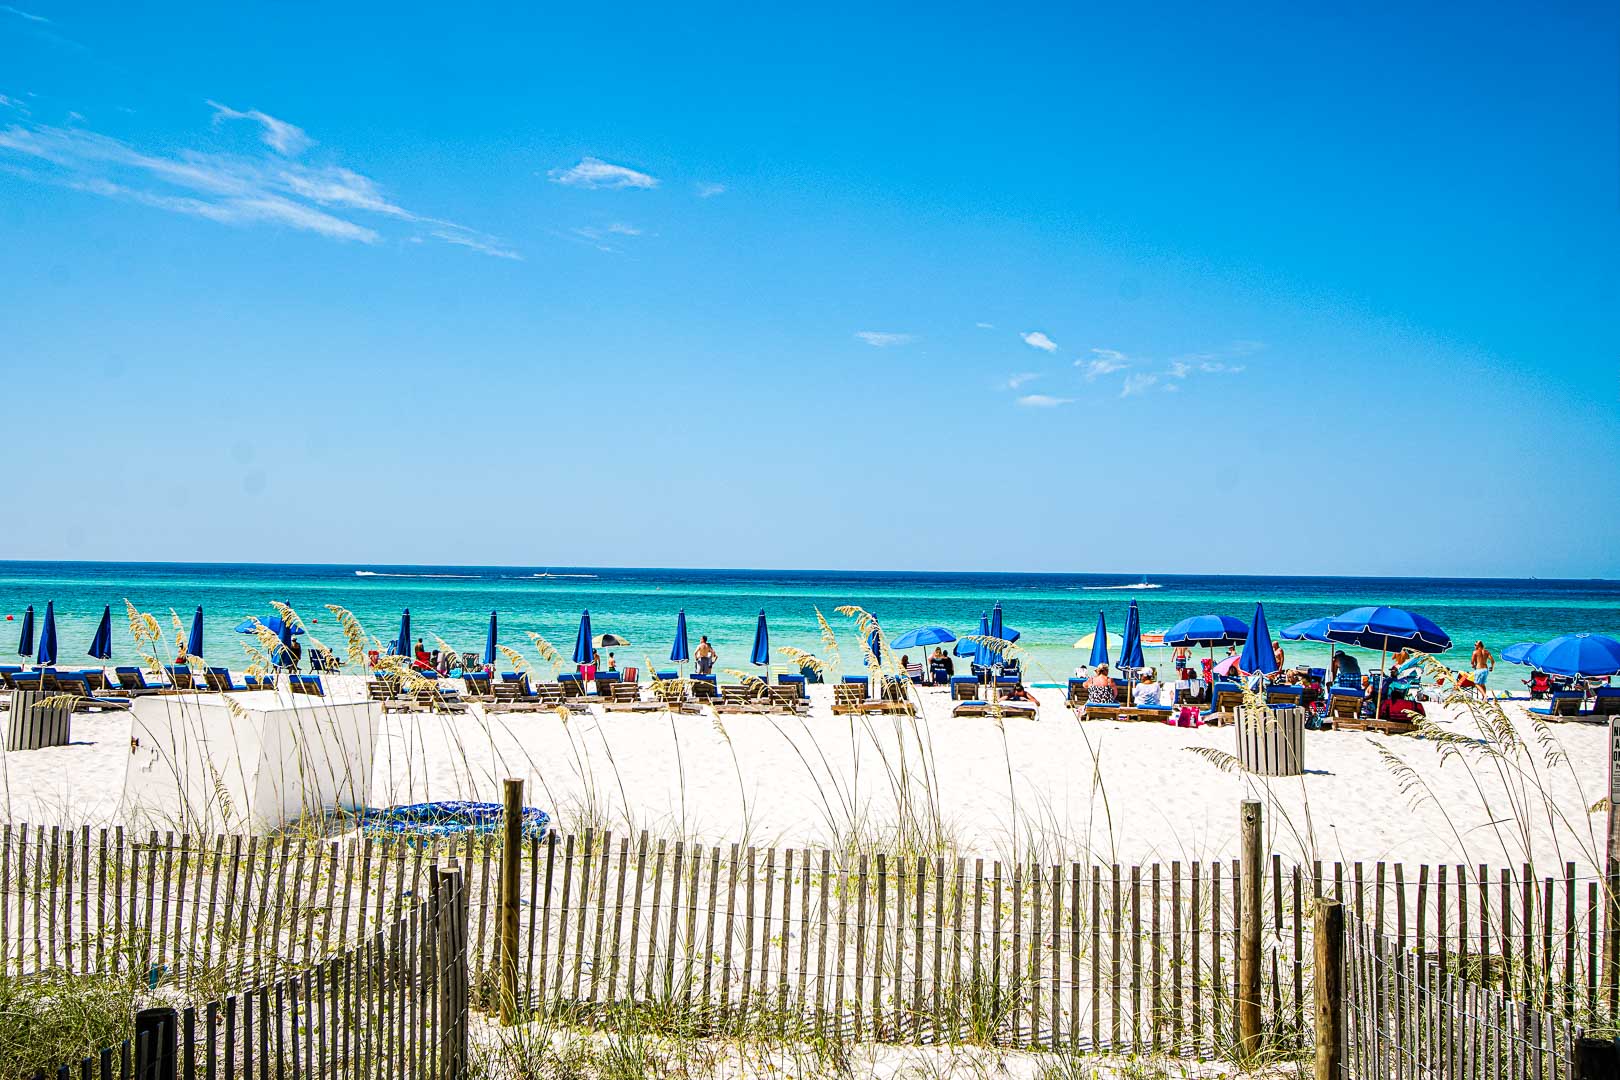 A scenic view of the beach from VRI's Landmark Holiday Beach Resort in Panama City, Florida.